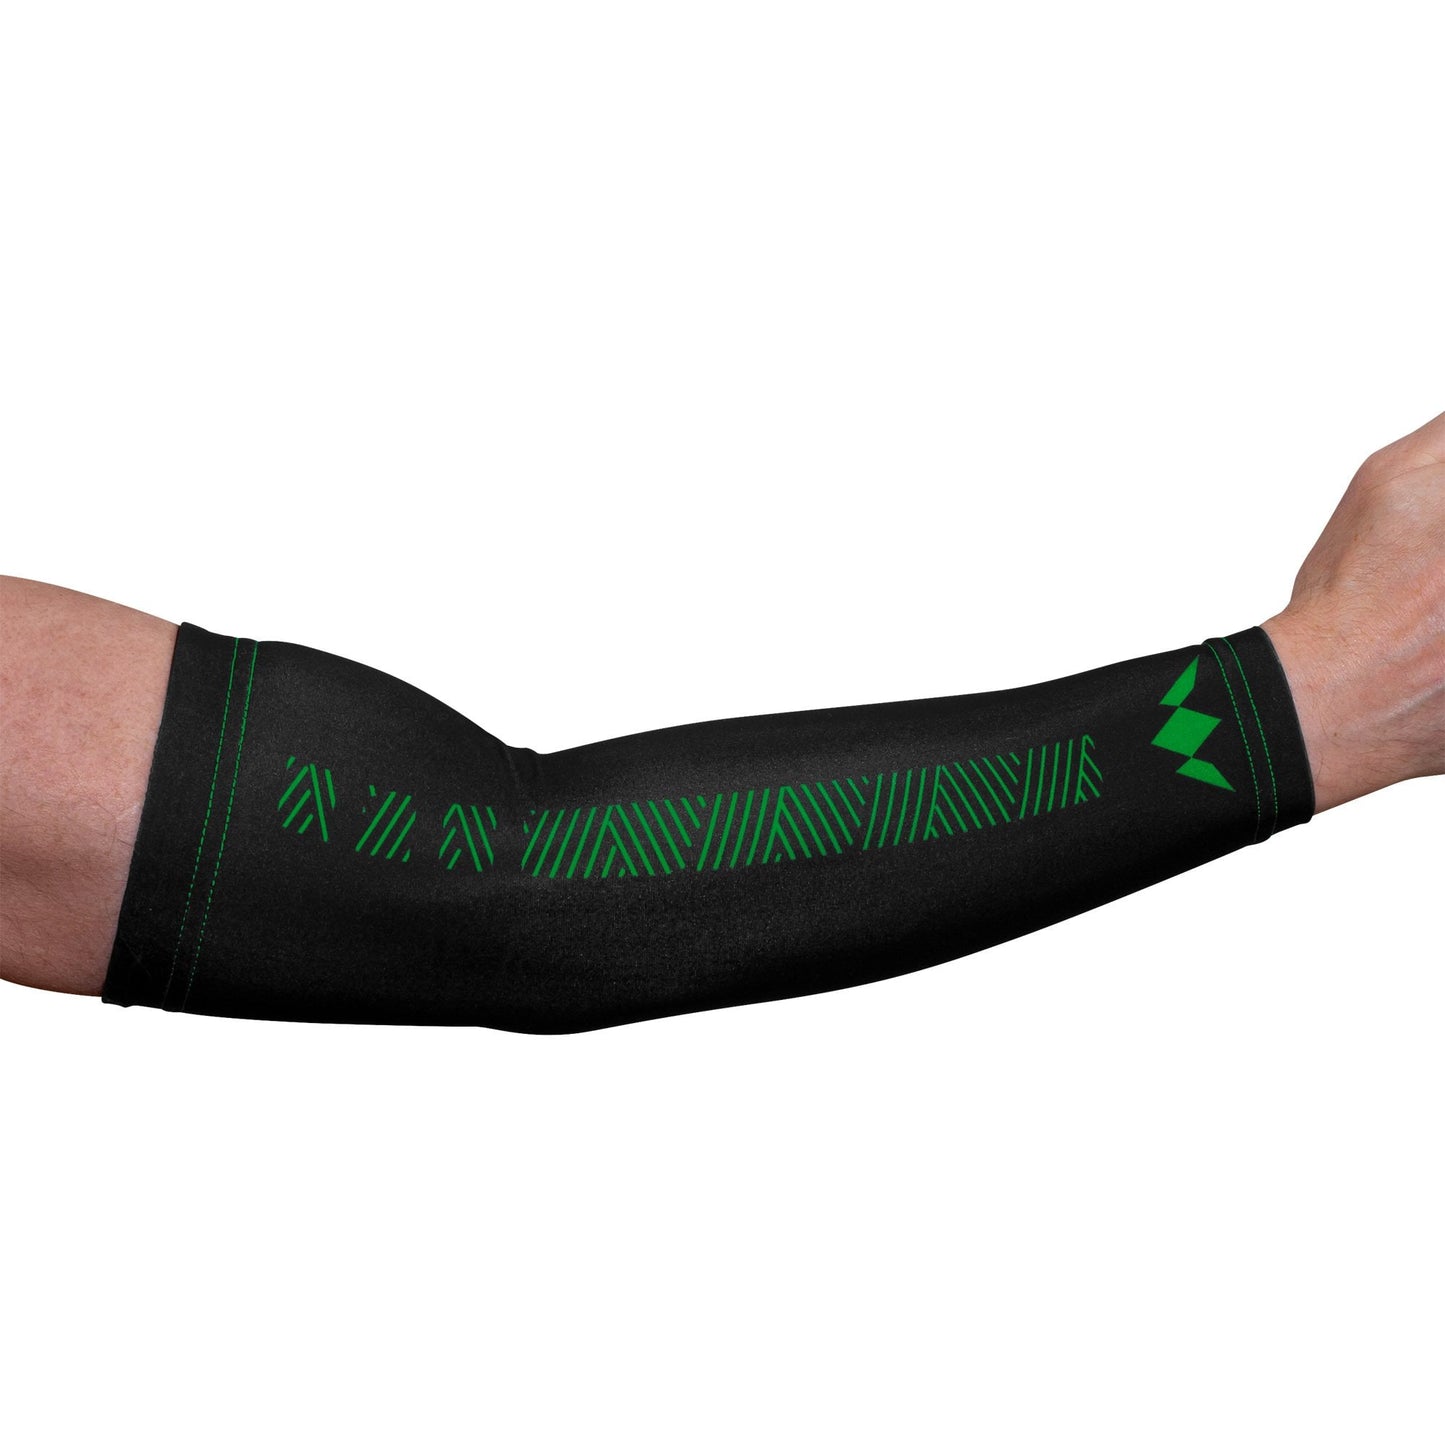 Mission Darts REACH Arm Sleeves (Pair) - Reflex - Black & Green